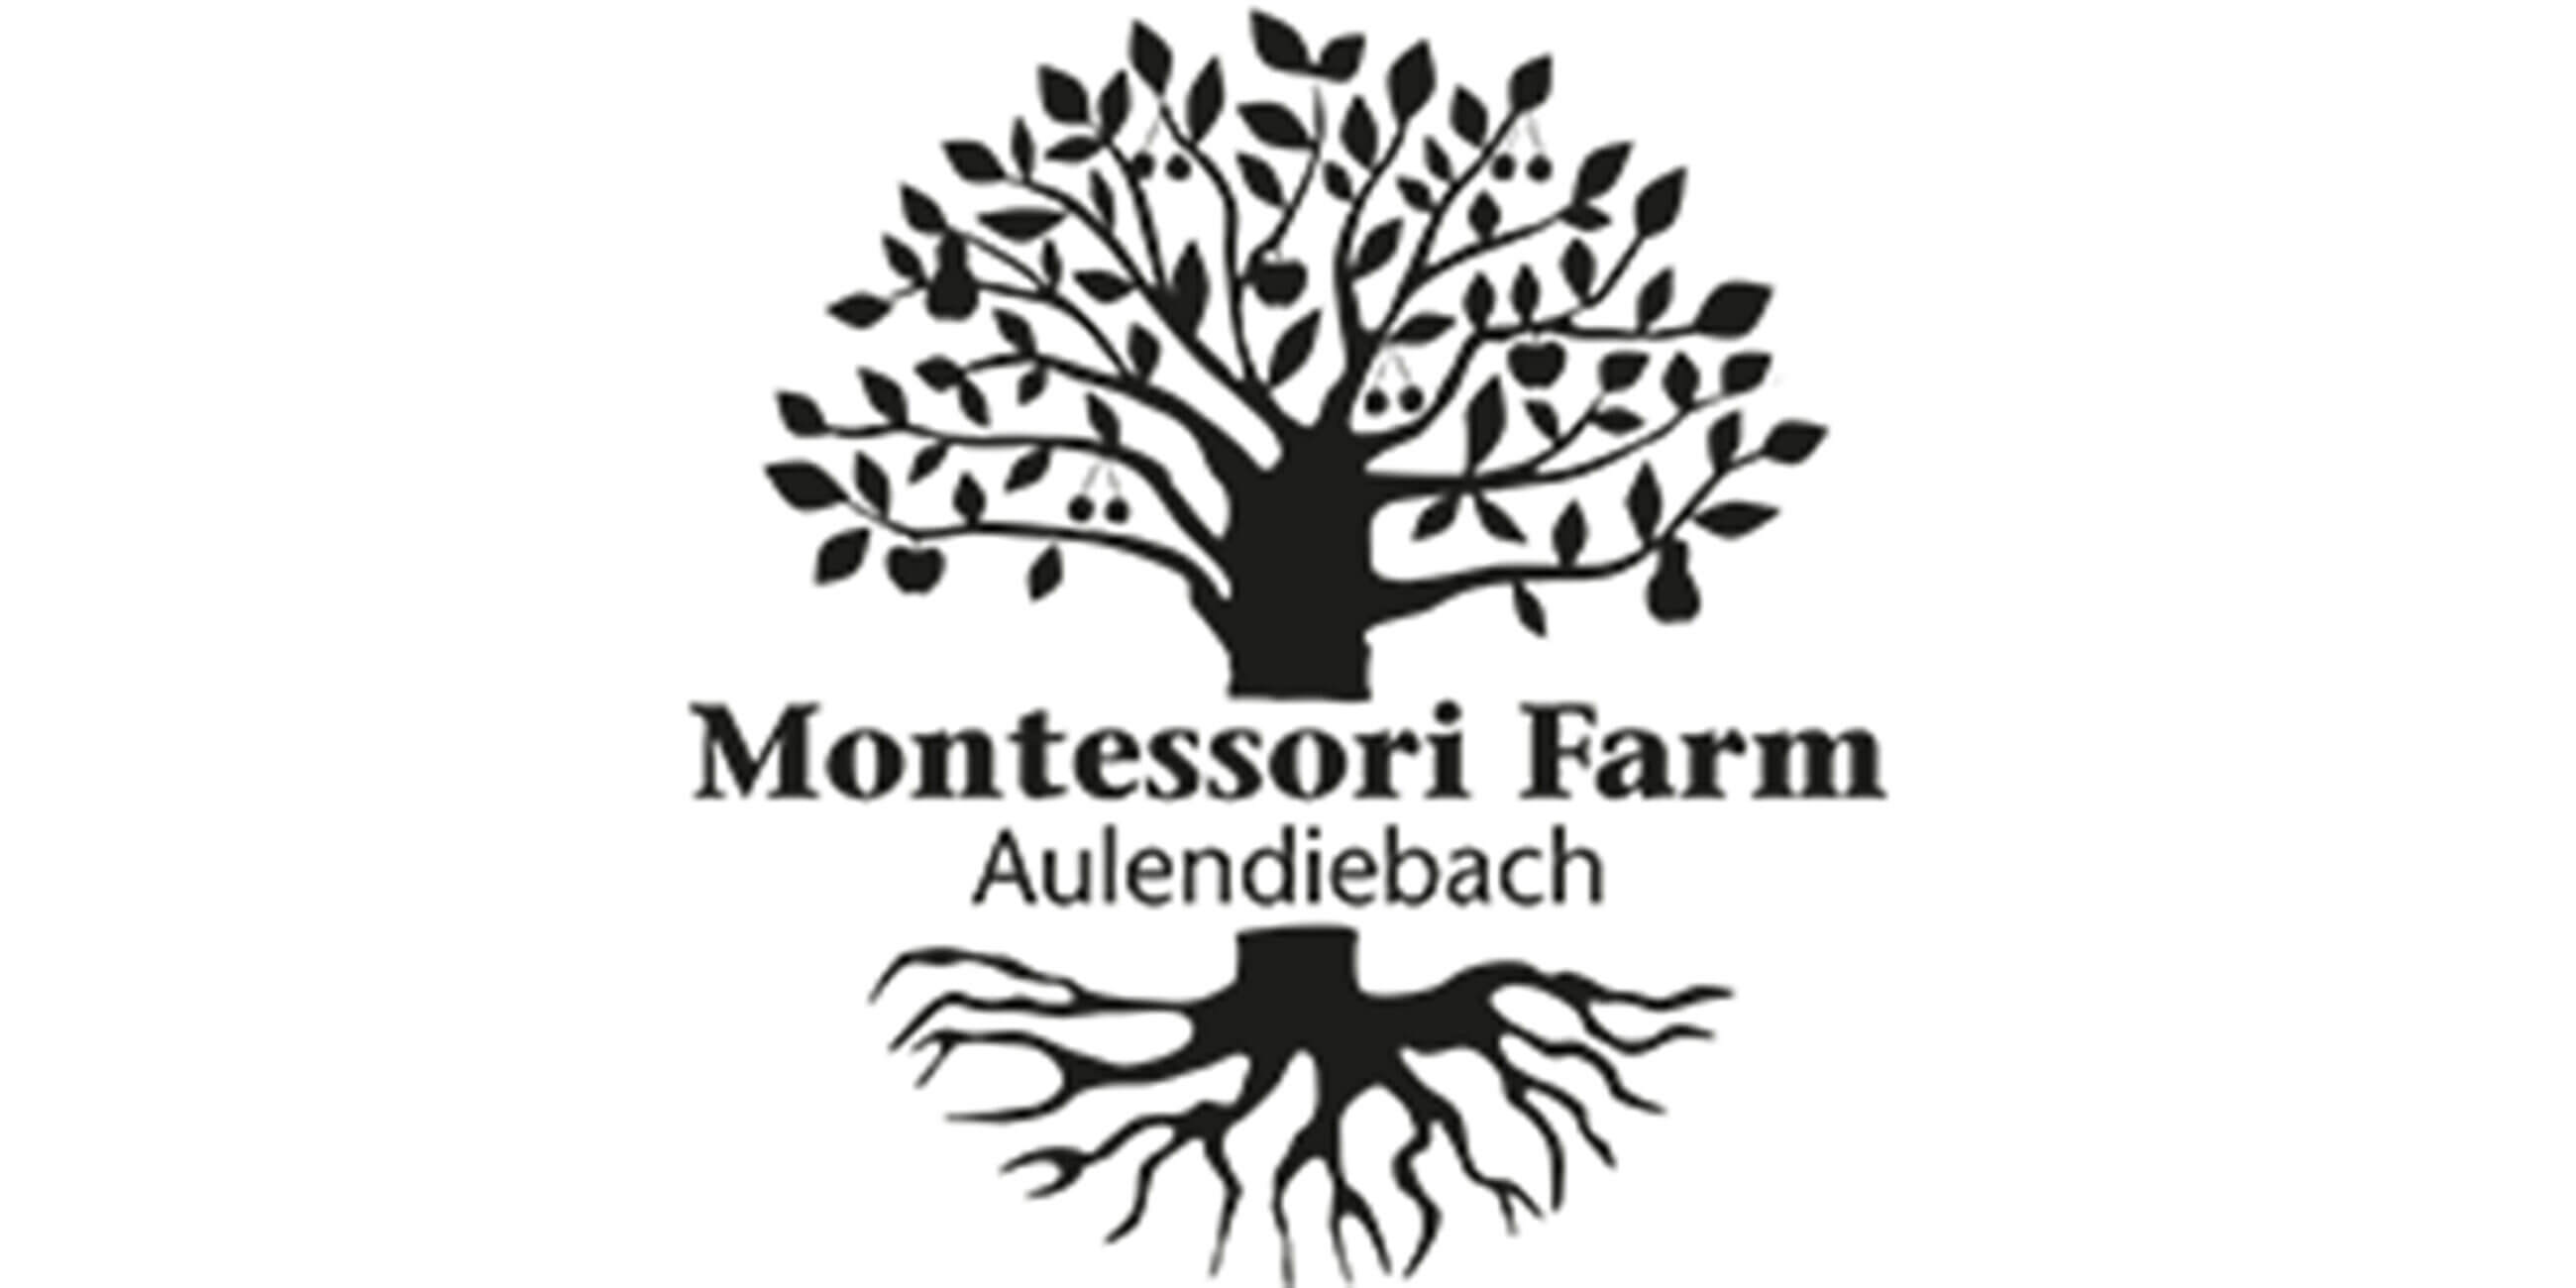 Montessori Farm Aulendiebach